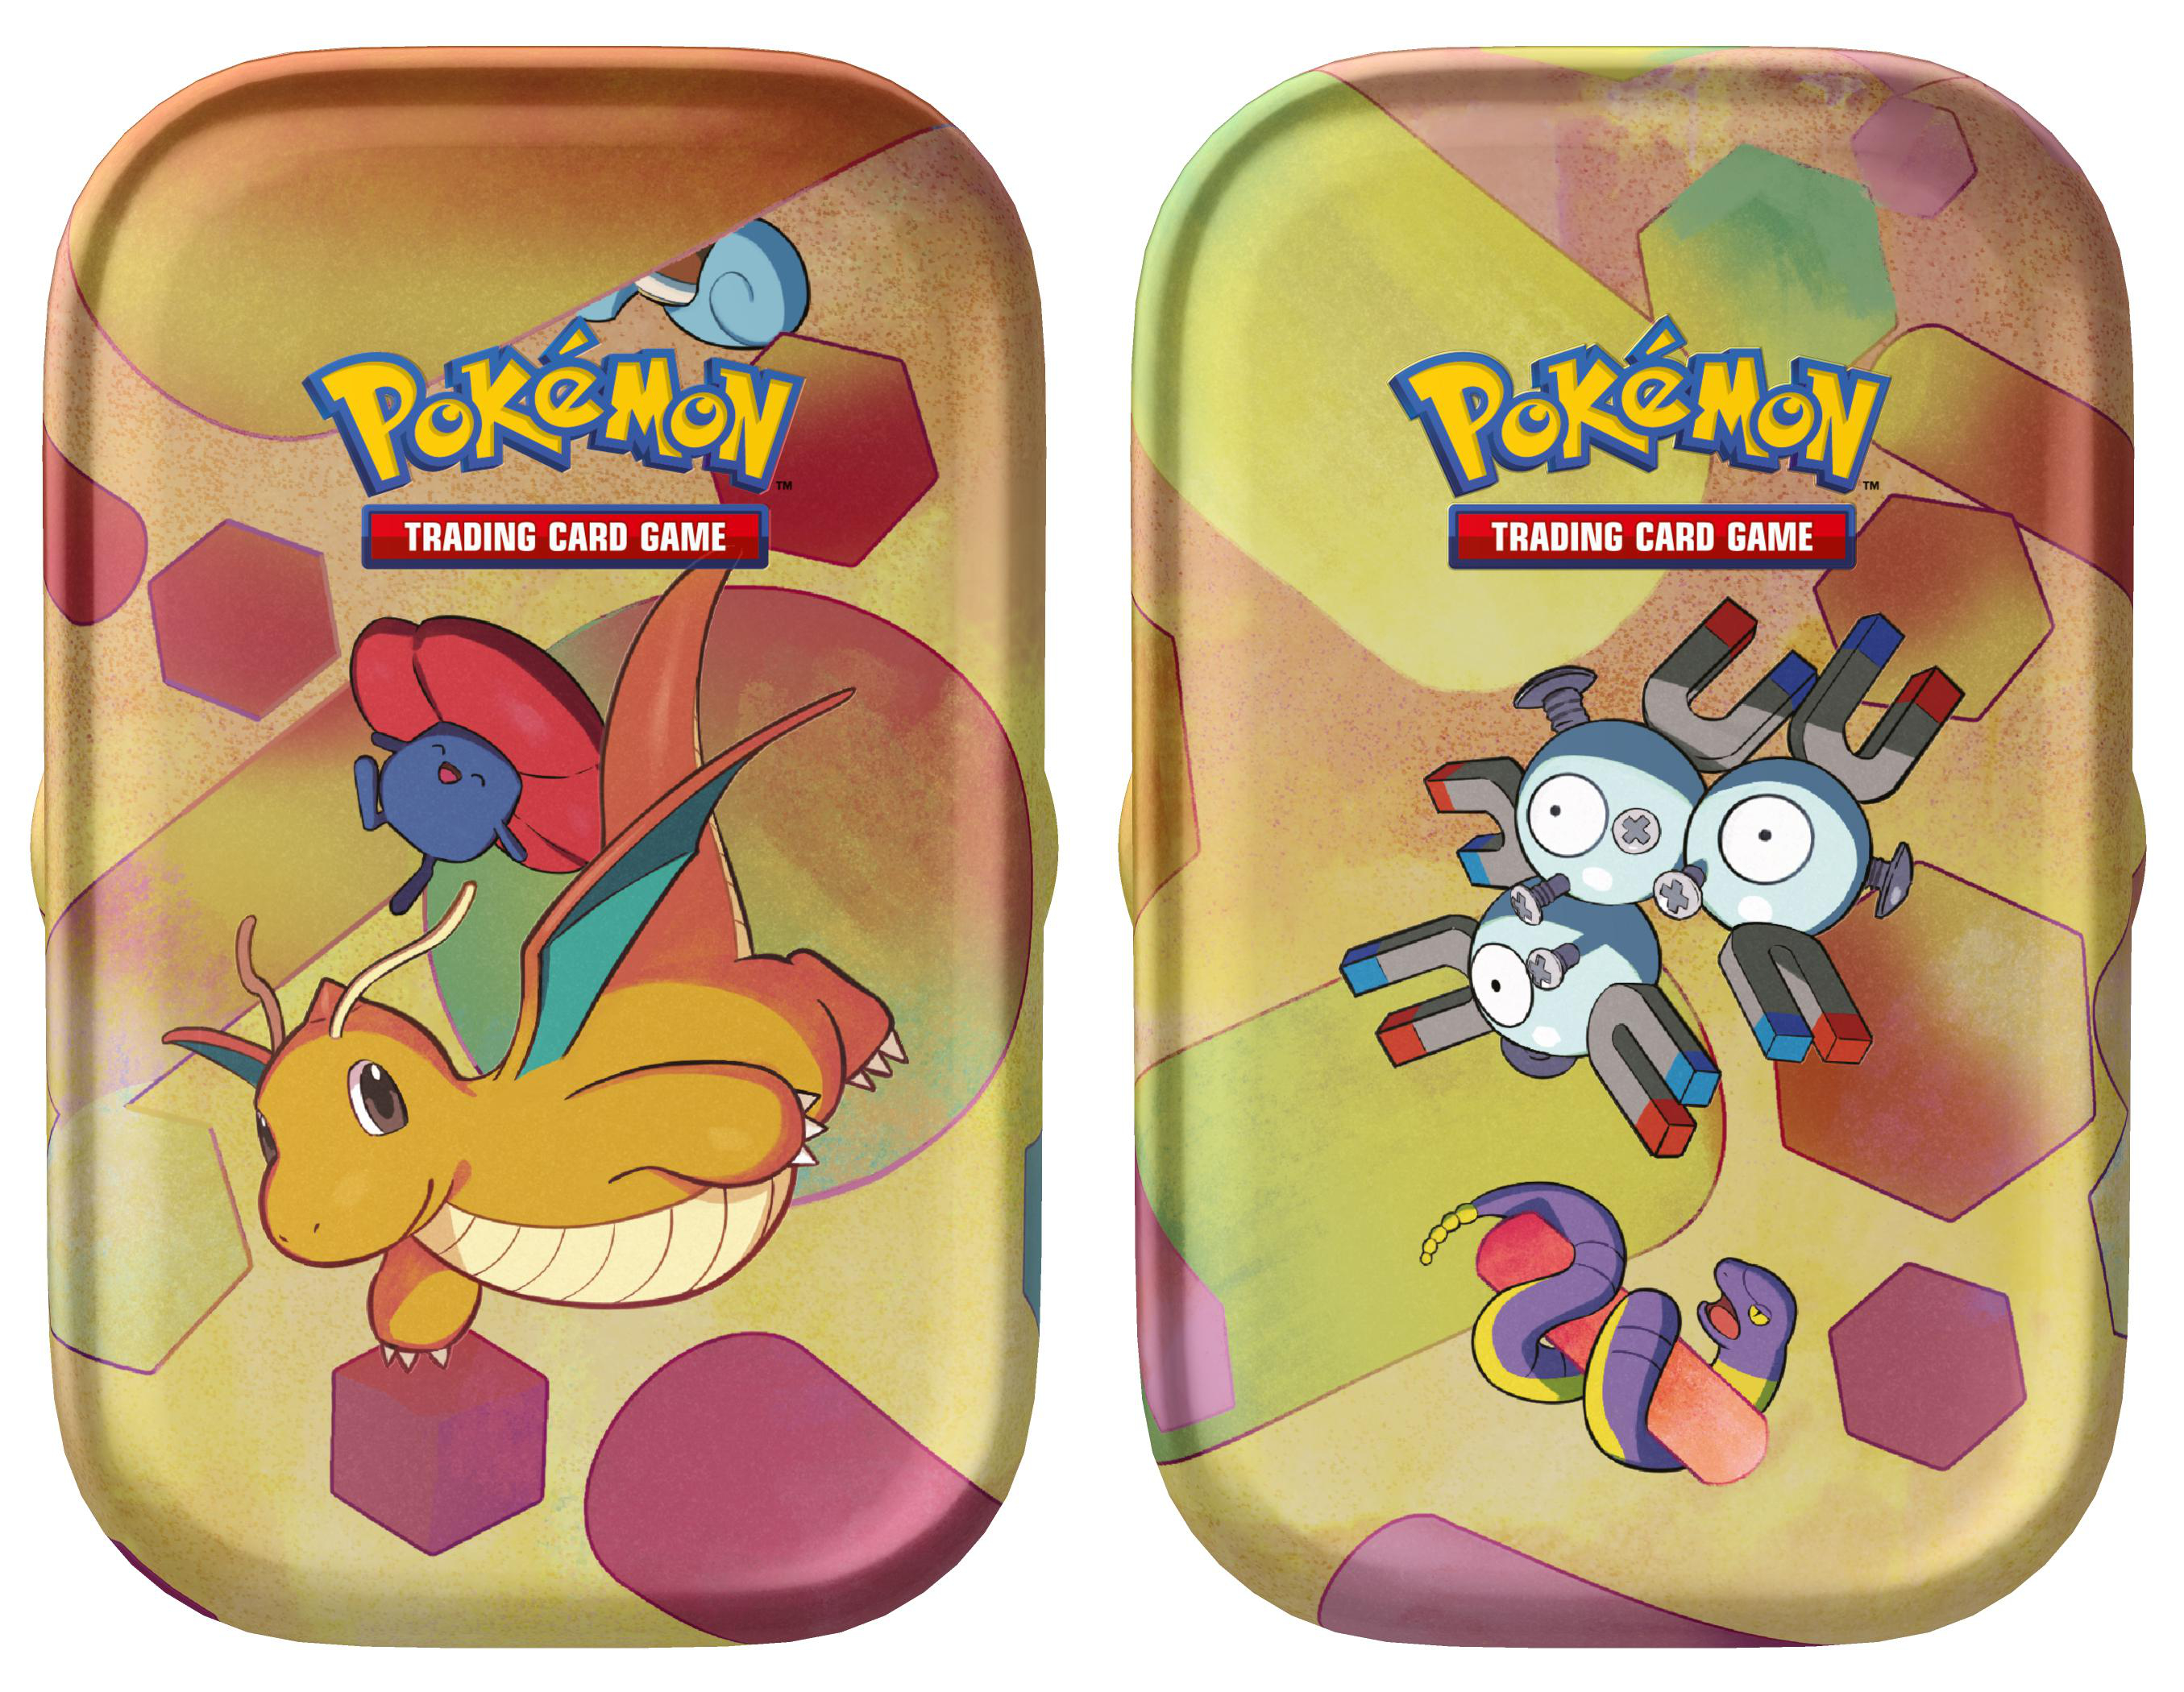 THE Sammelkarten Mini KP03.5 Pokémon 45553 INT. POKEMON Tins COMPANY